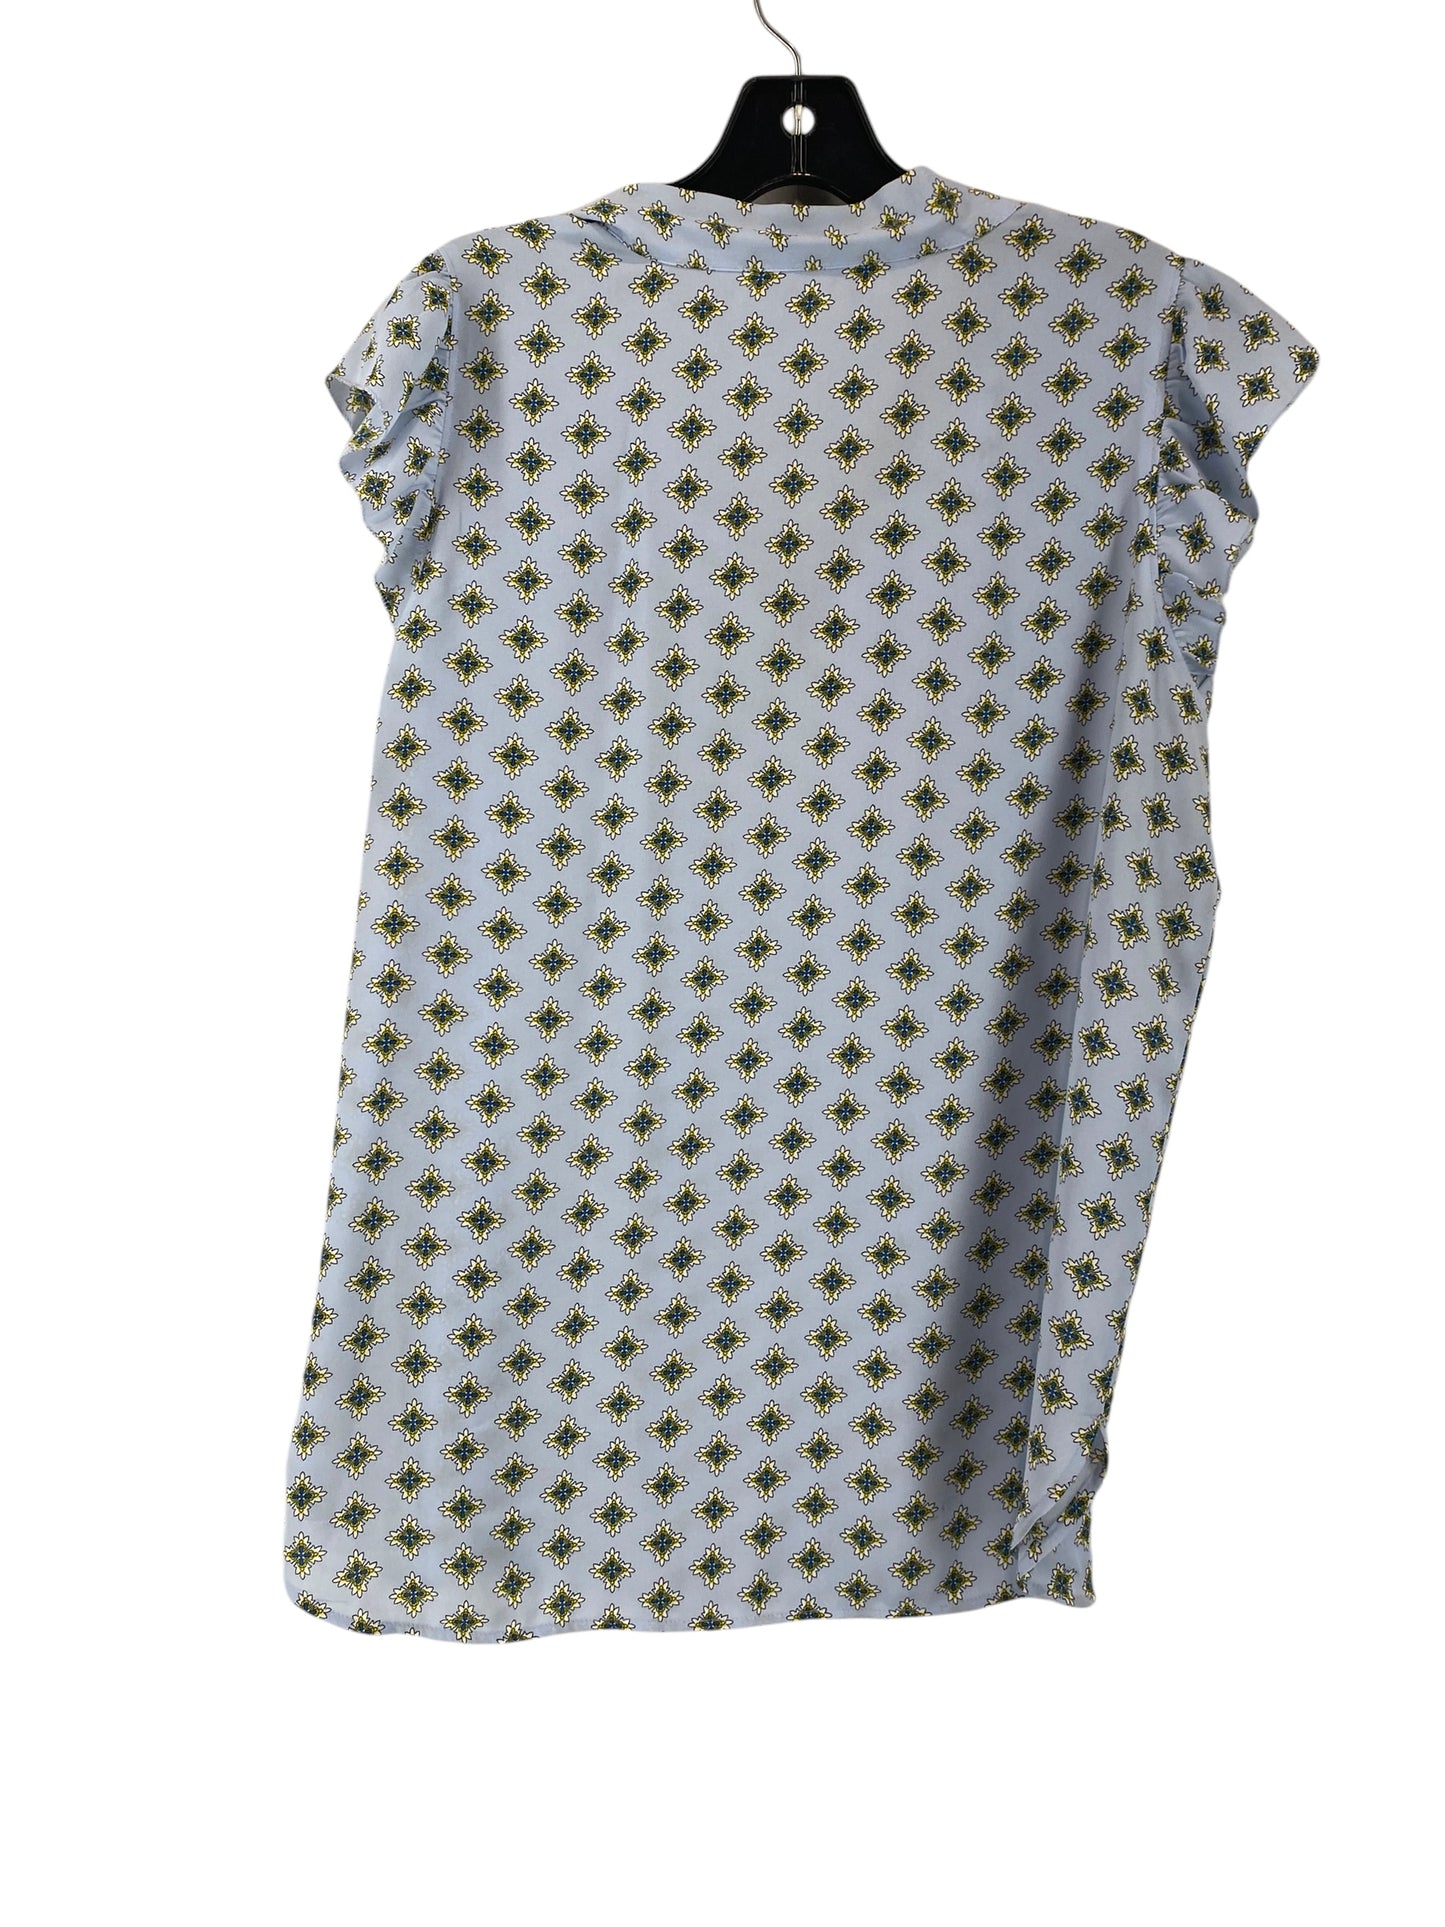 Blouse Short Sleeve By Loft  Size: M